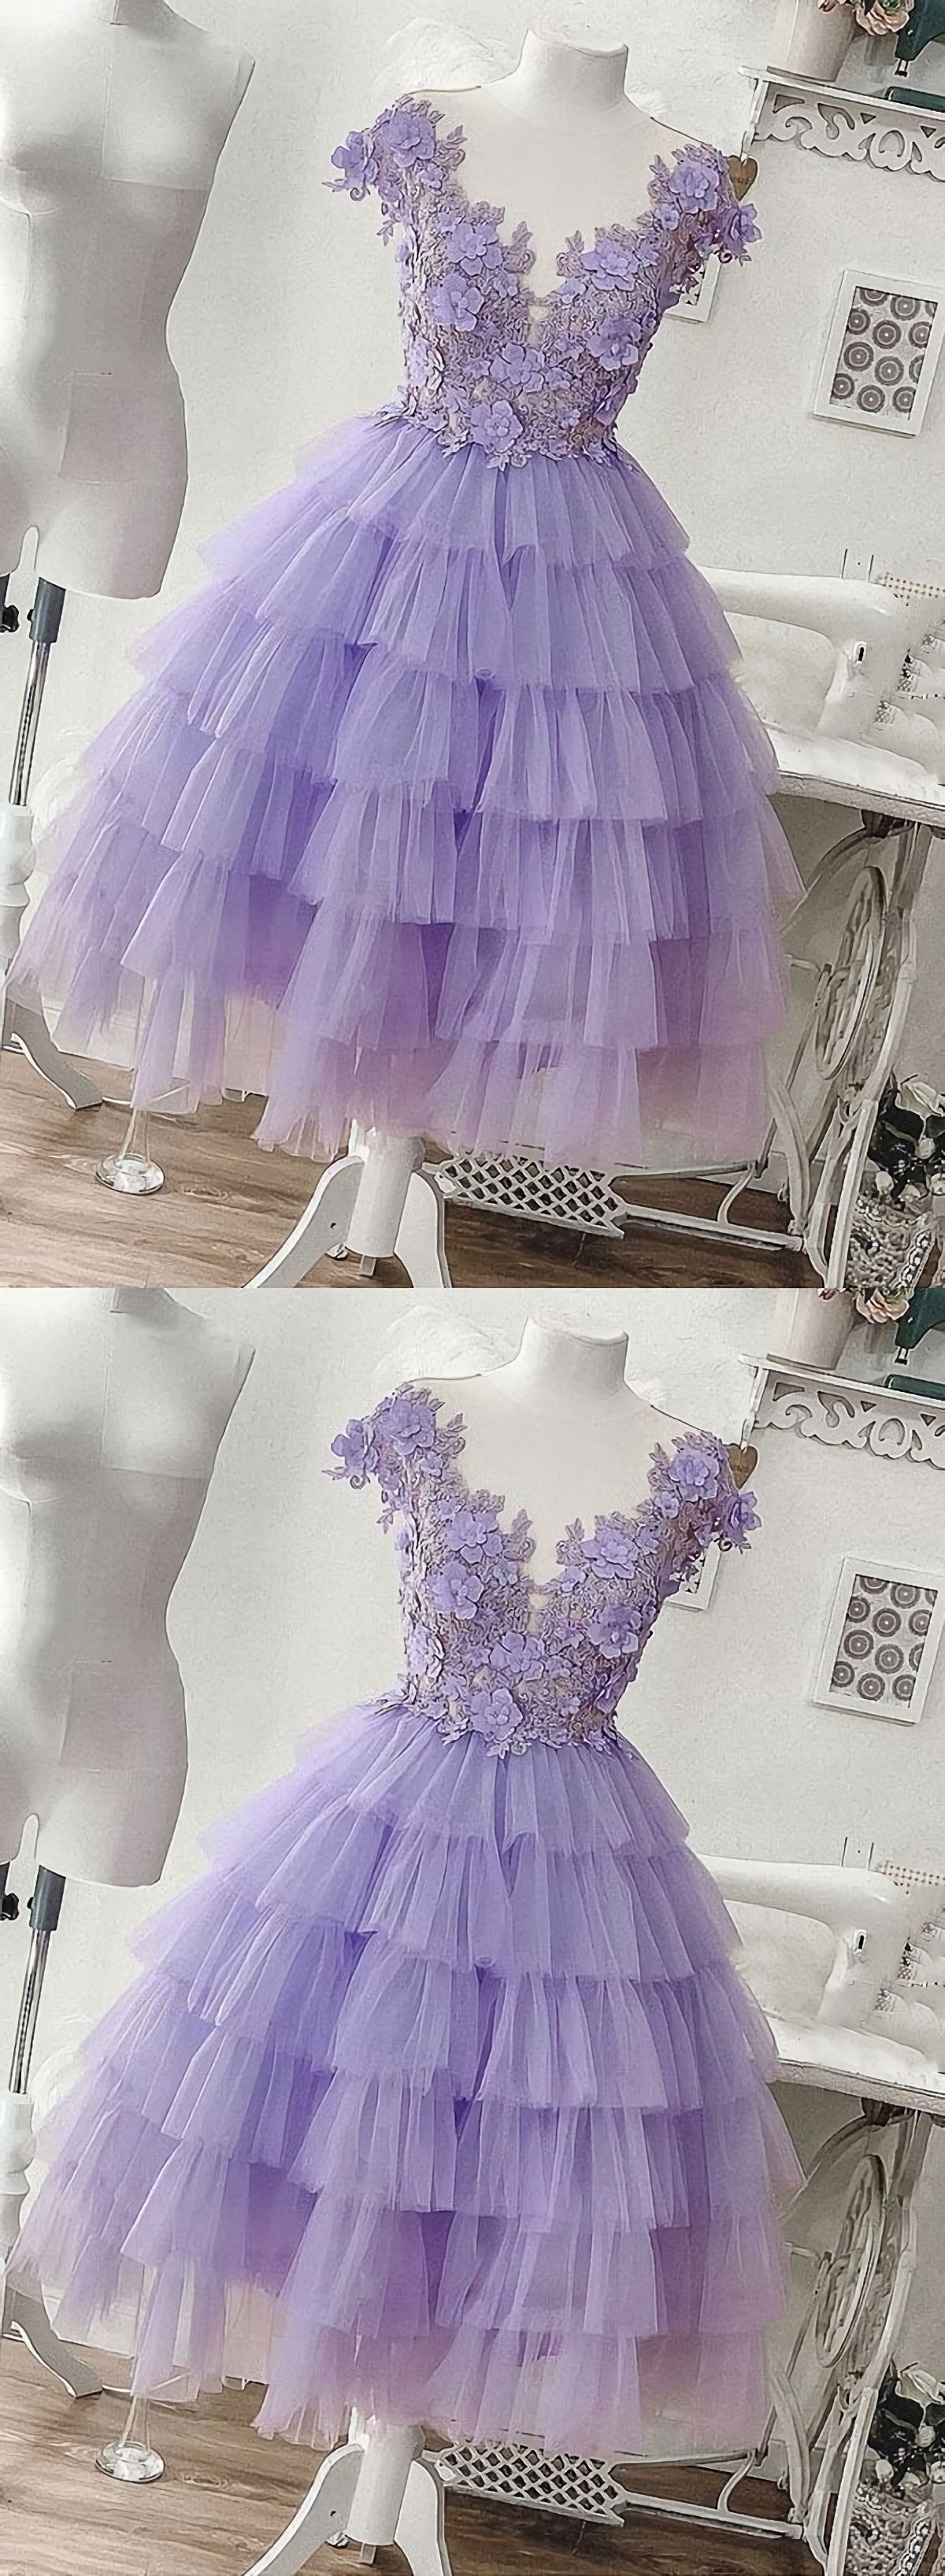 Fall Wedding Ideas, Purple Tulle Applique Short Homecoming Dress, Homecoming Dress